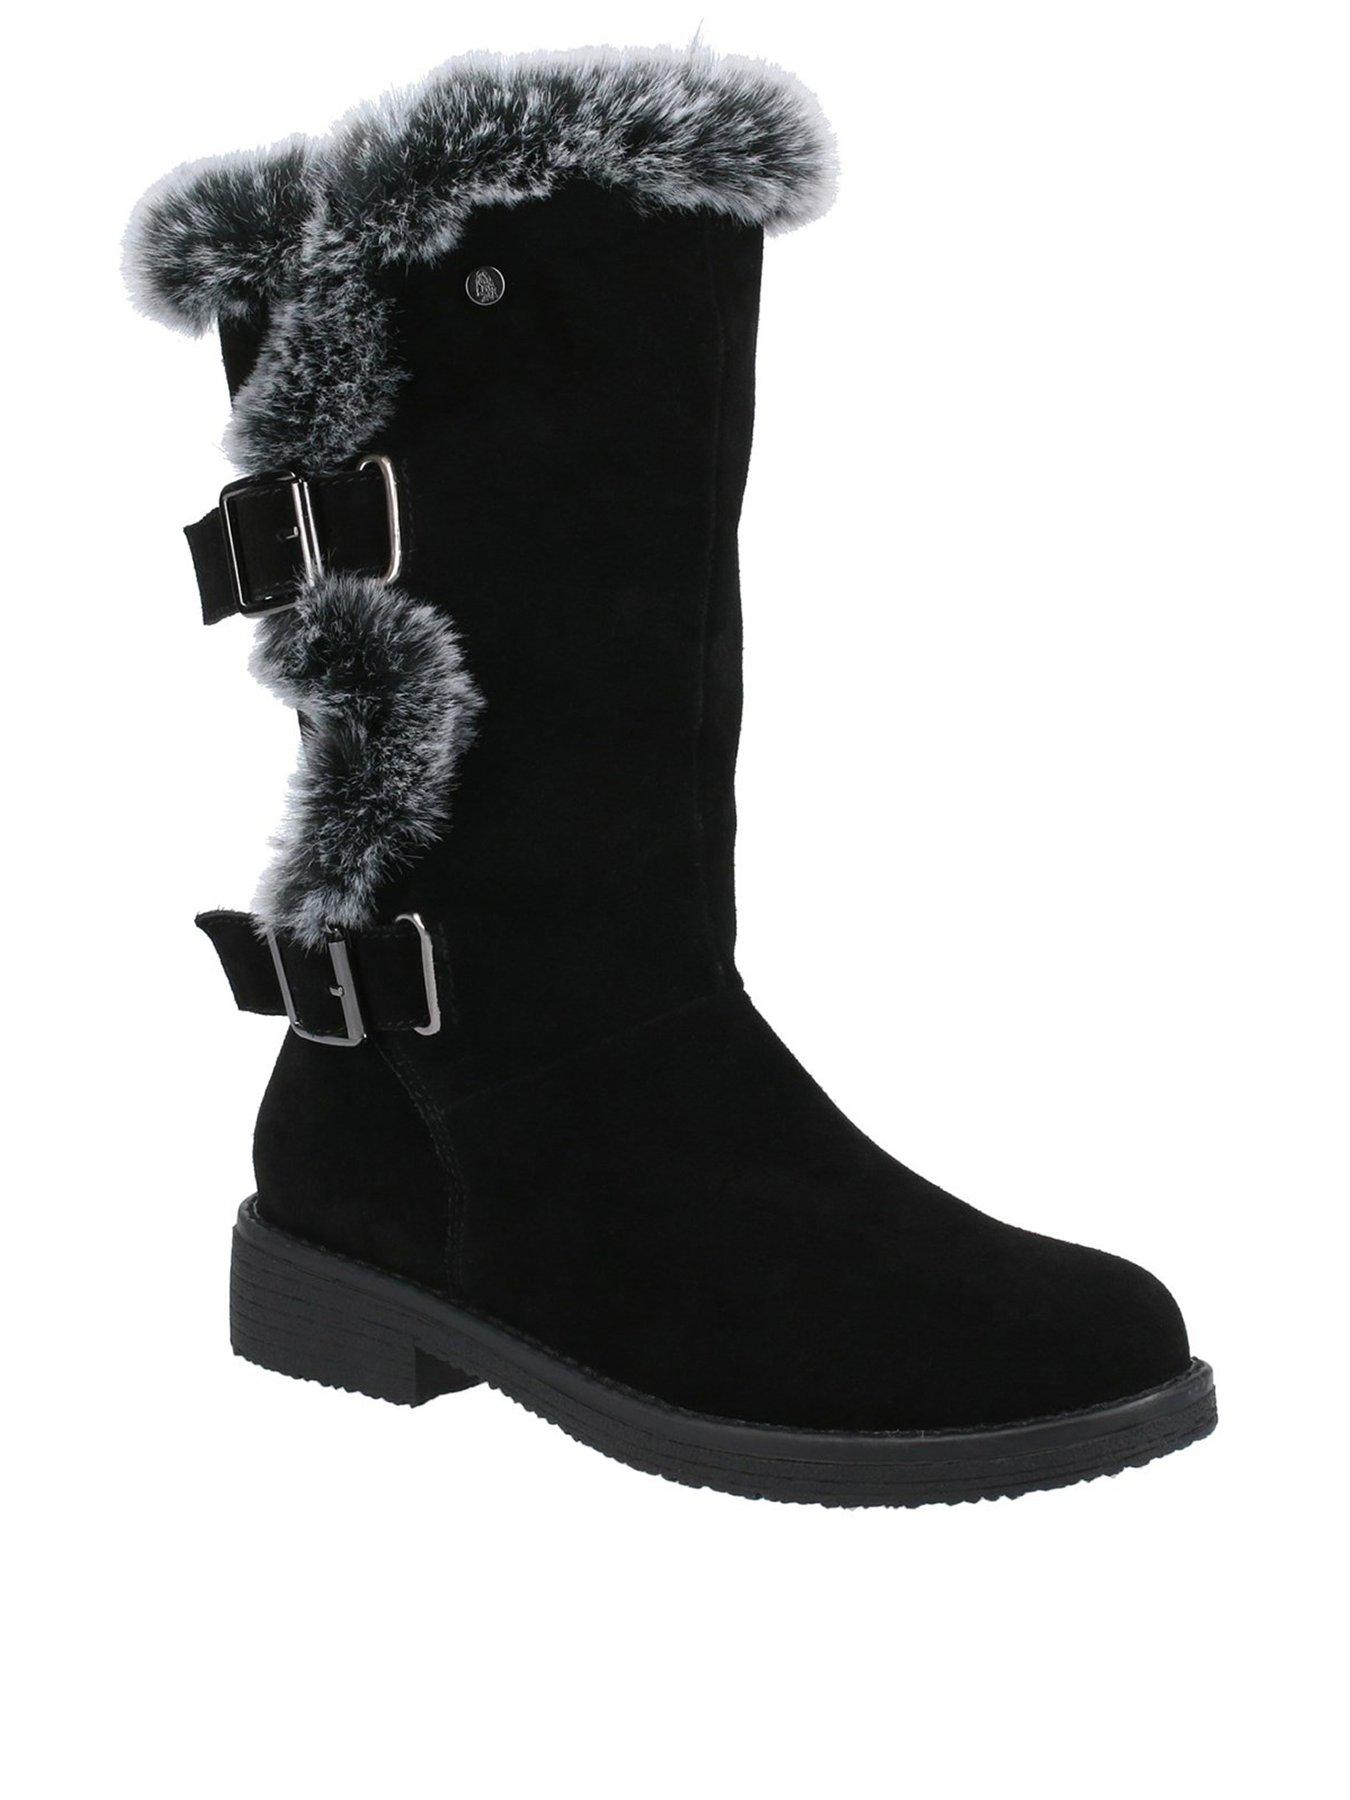 Hush Puppies Megan Knee High Boots - Black | very.co.uk